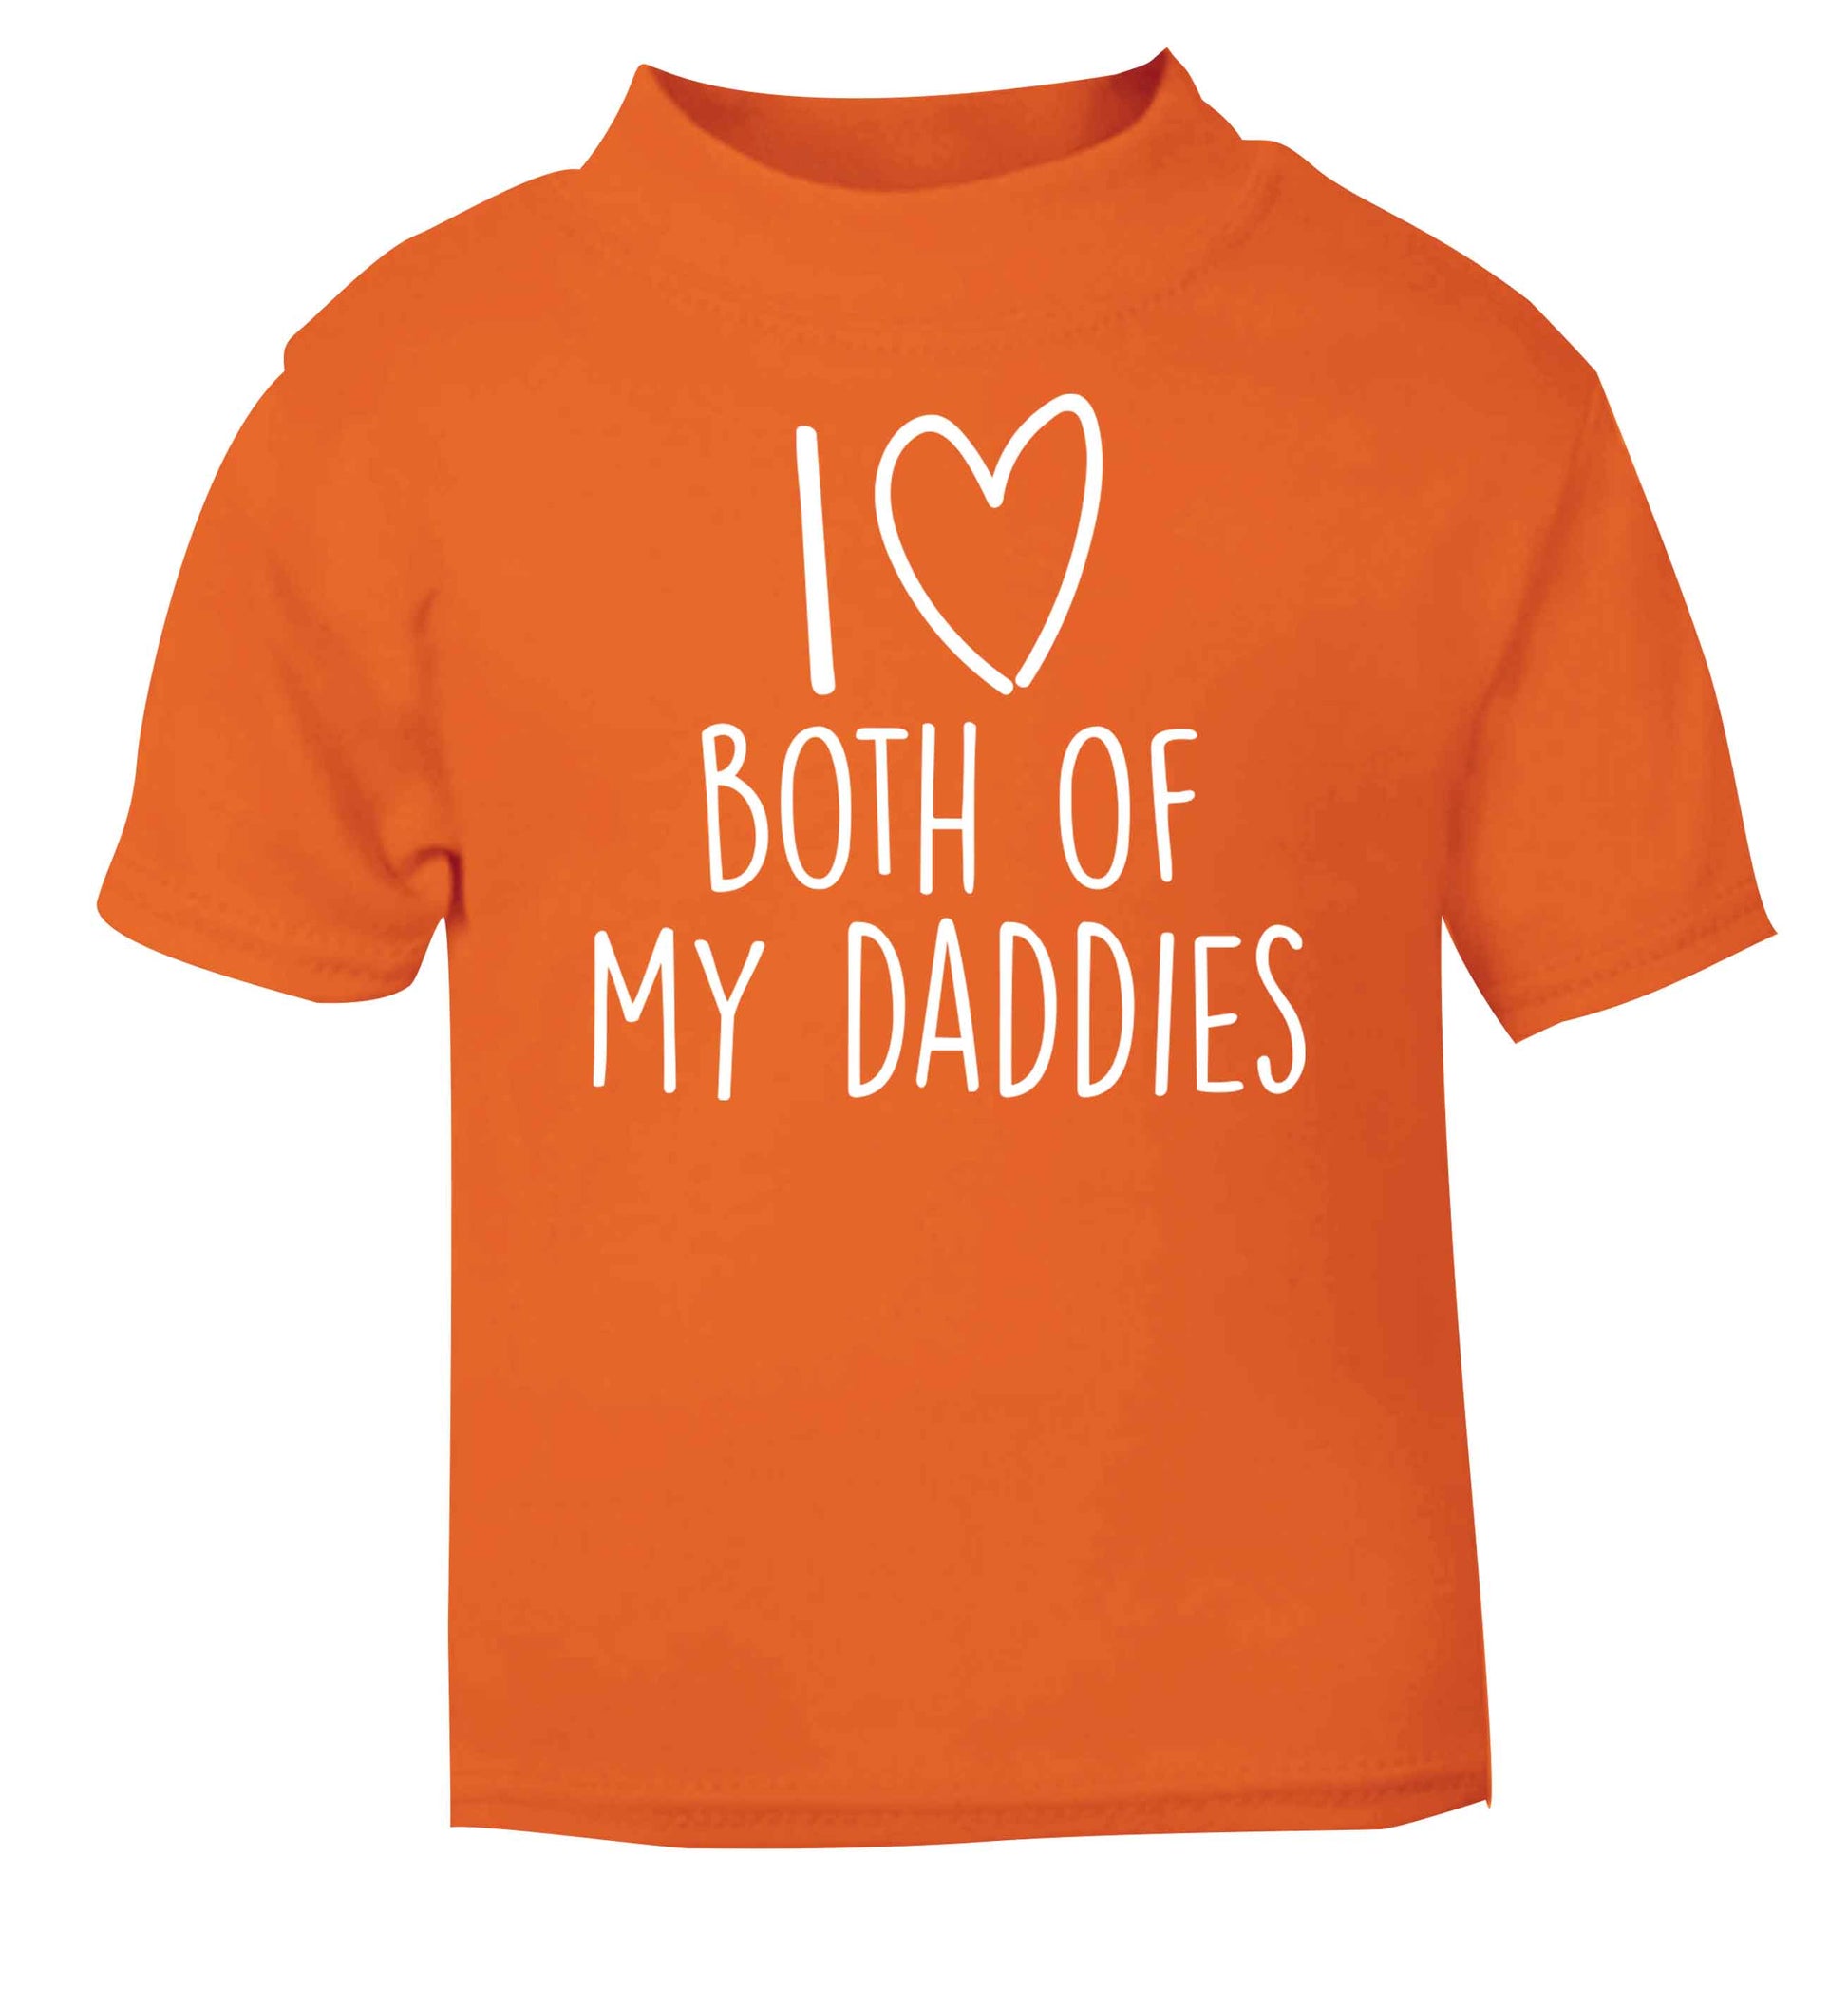 I love both of my daddies orange baby toddler Tshirt 2 Years